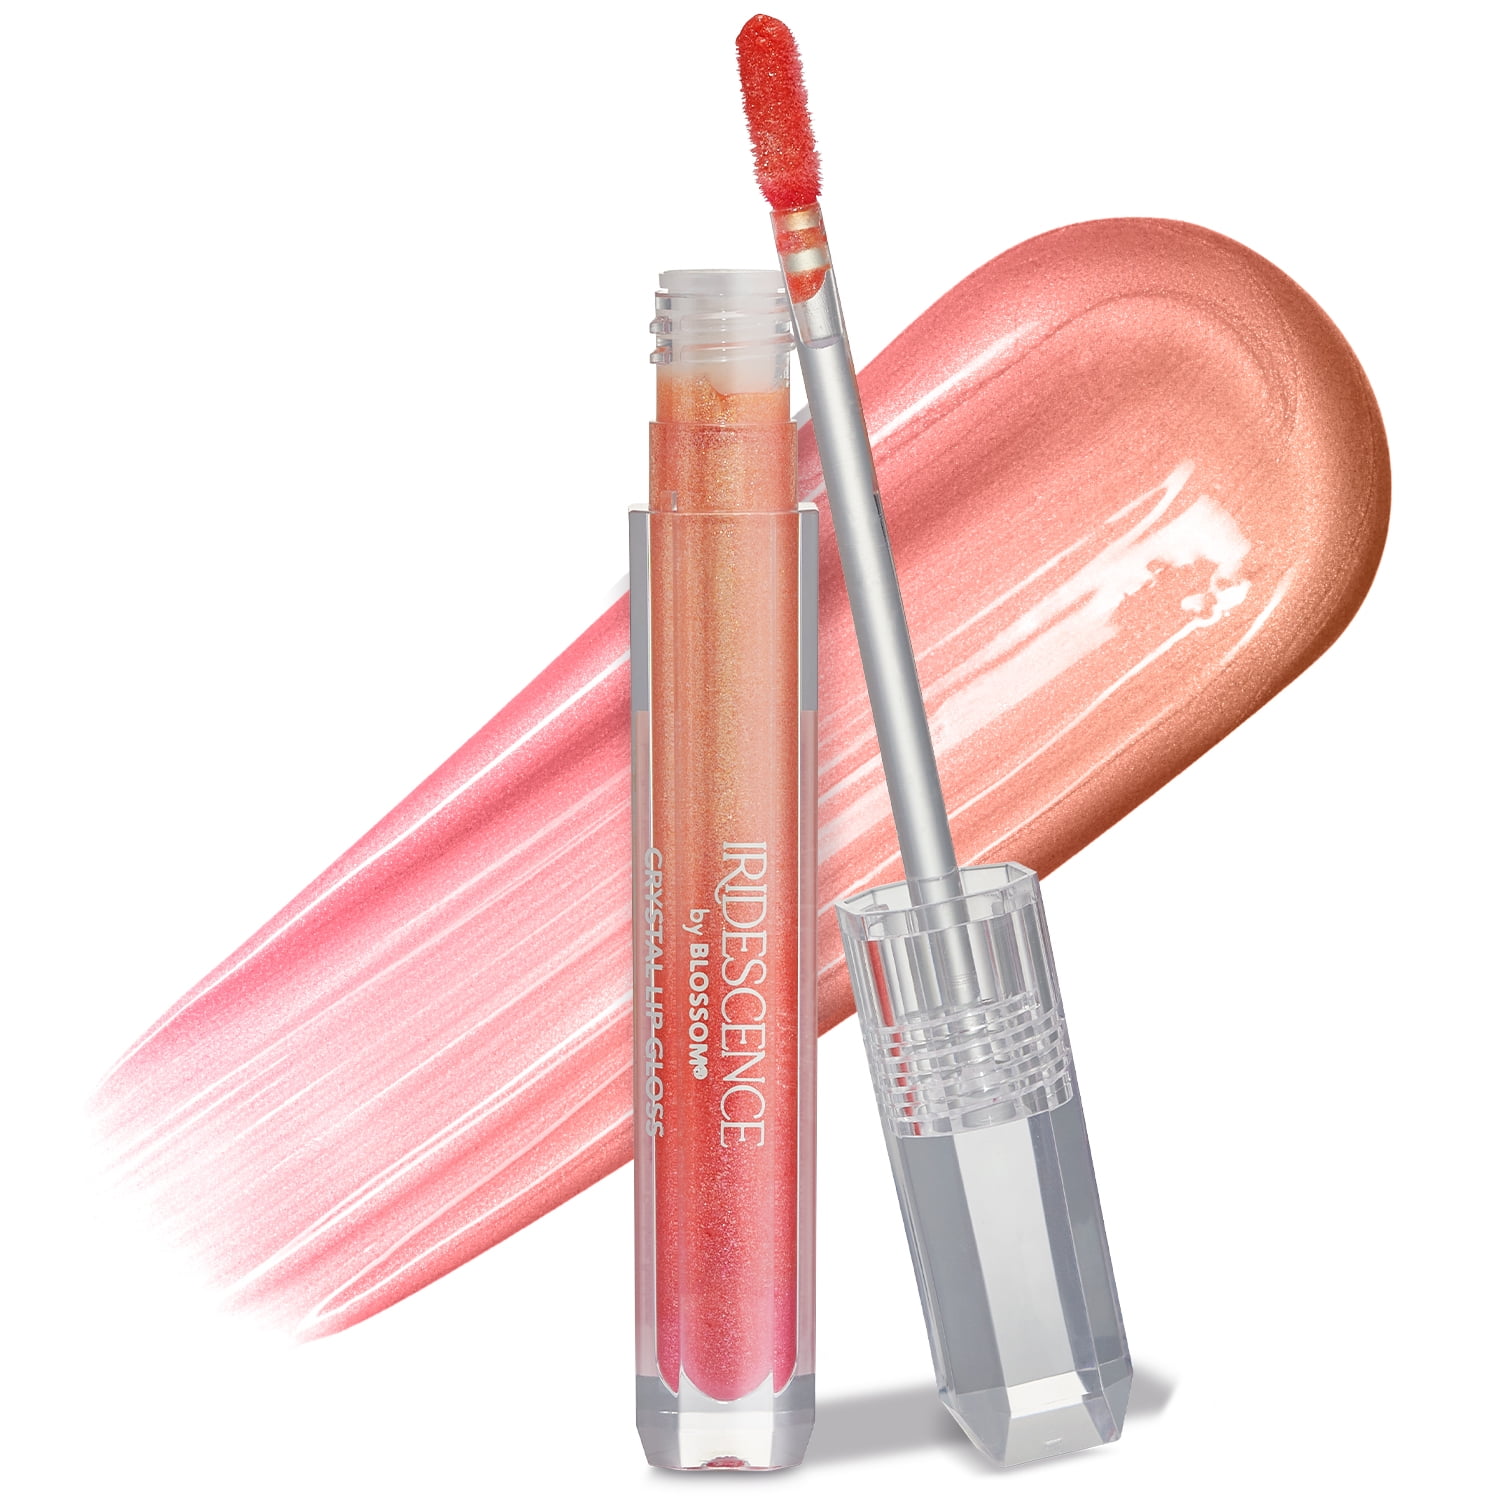  PARAMISS lip gloss pigment powder and lip gloss base B  moisturize : Beauty & Personal Care